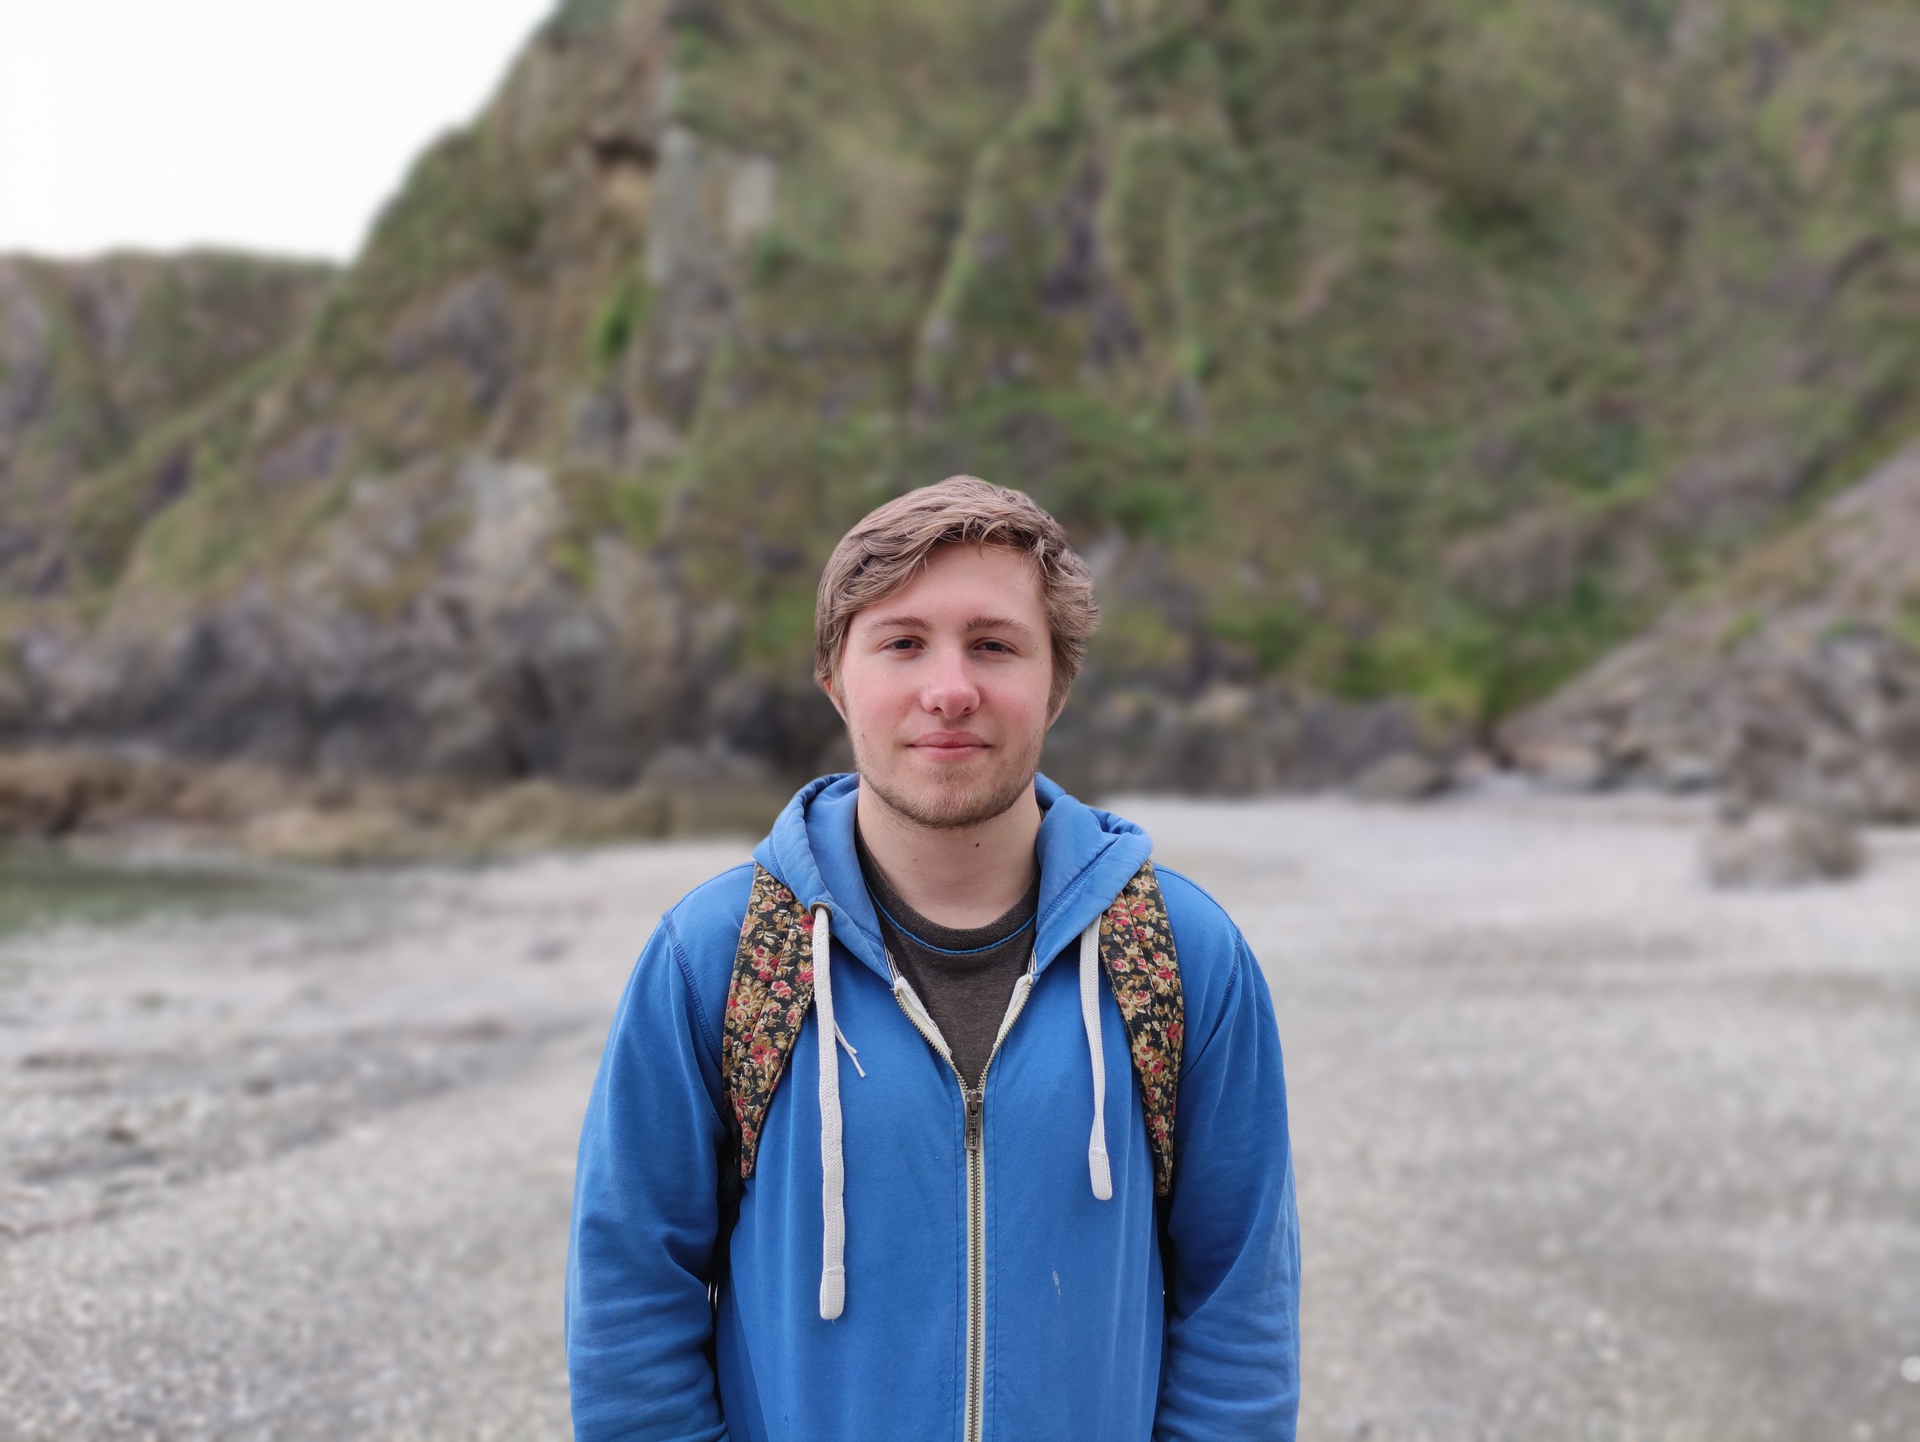 Poco F2 Pro camera test Portrait test outdoors cliff